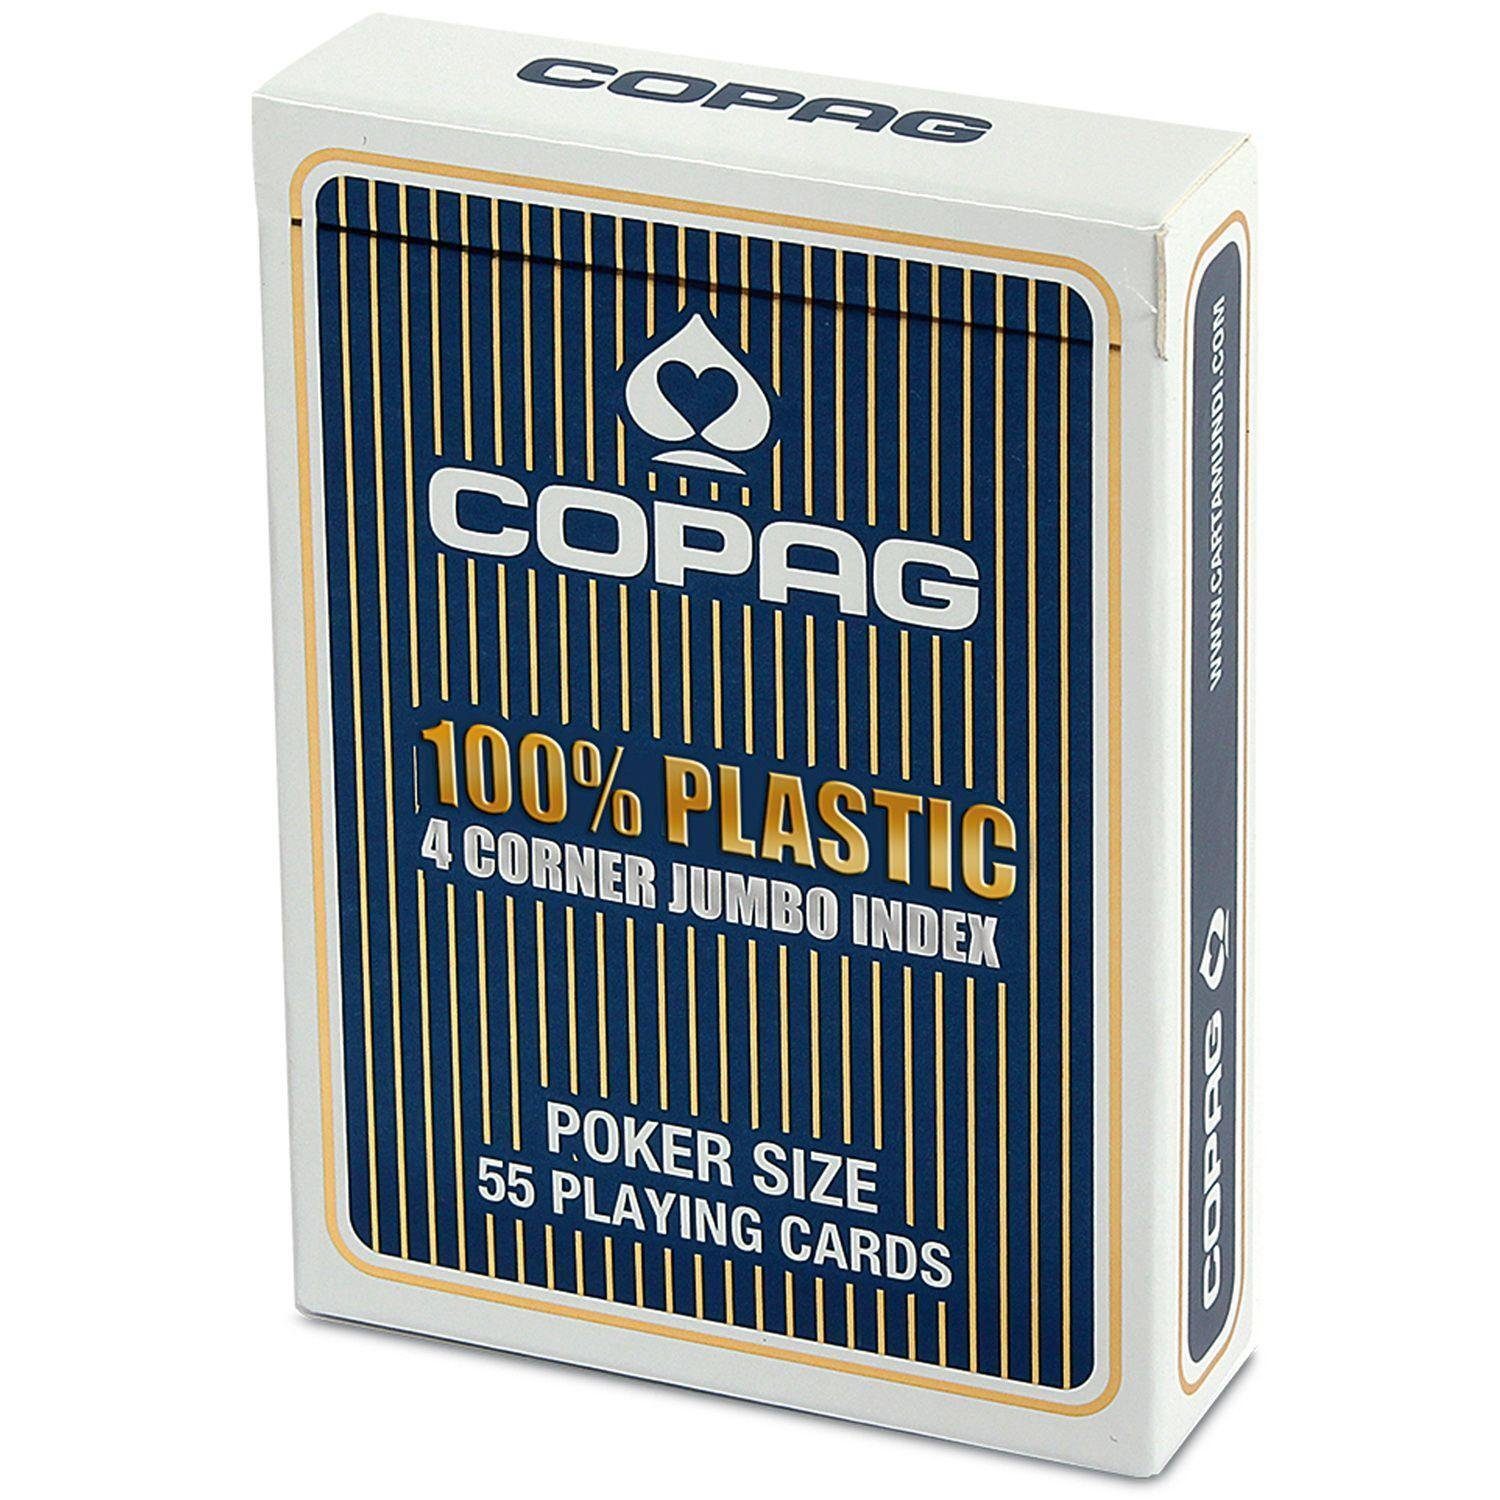 Cartamundi Spiel, COPAG® 100% Plastik Poker Jumbo Index blau